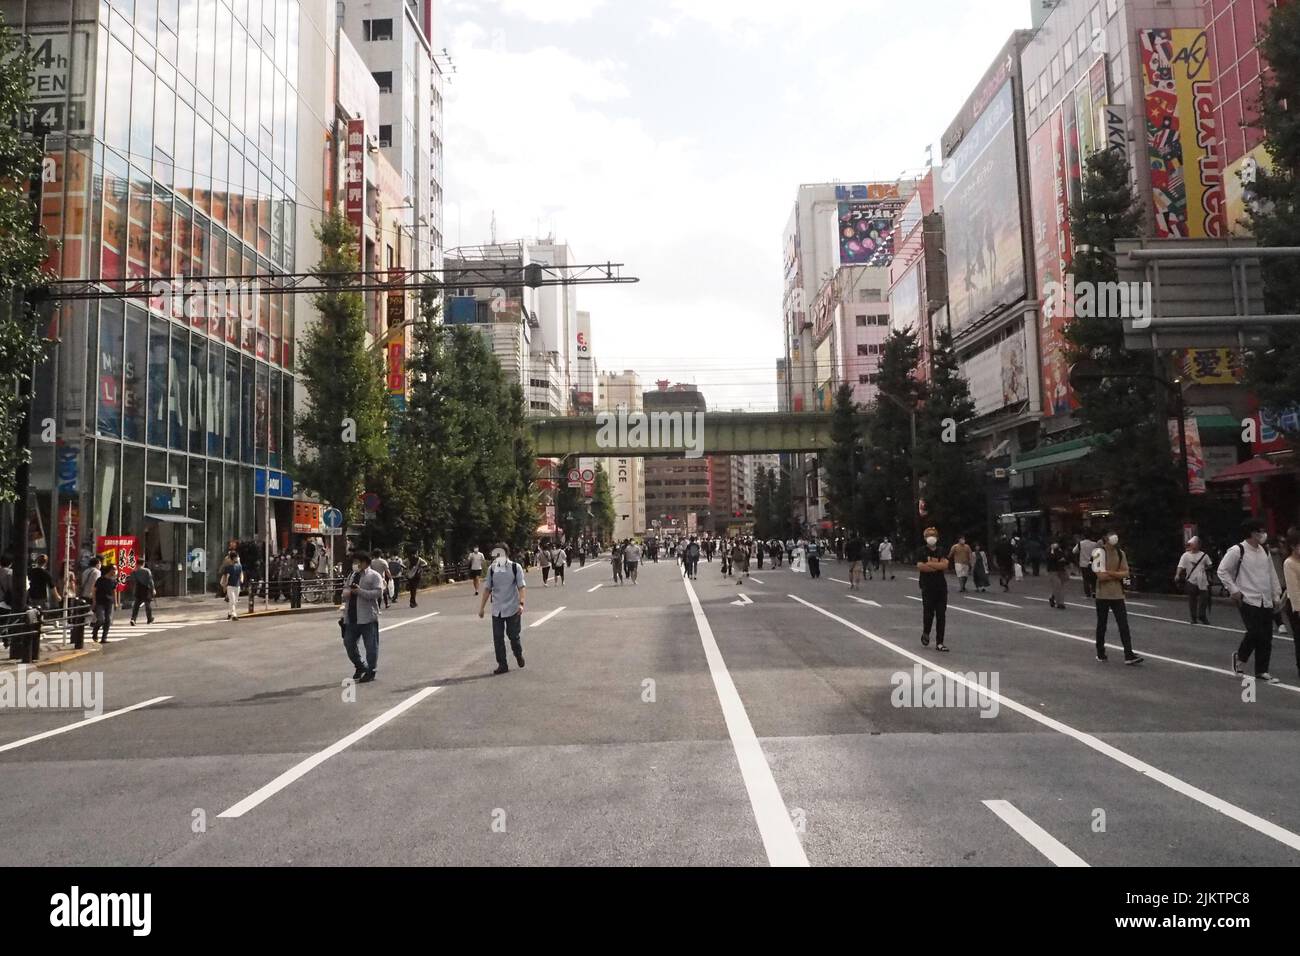 A beautiful shot of people walking on a car-free street in Akihabara, Tokyo Stock Photo